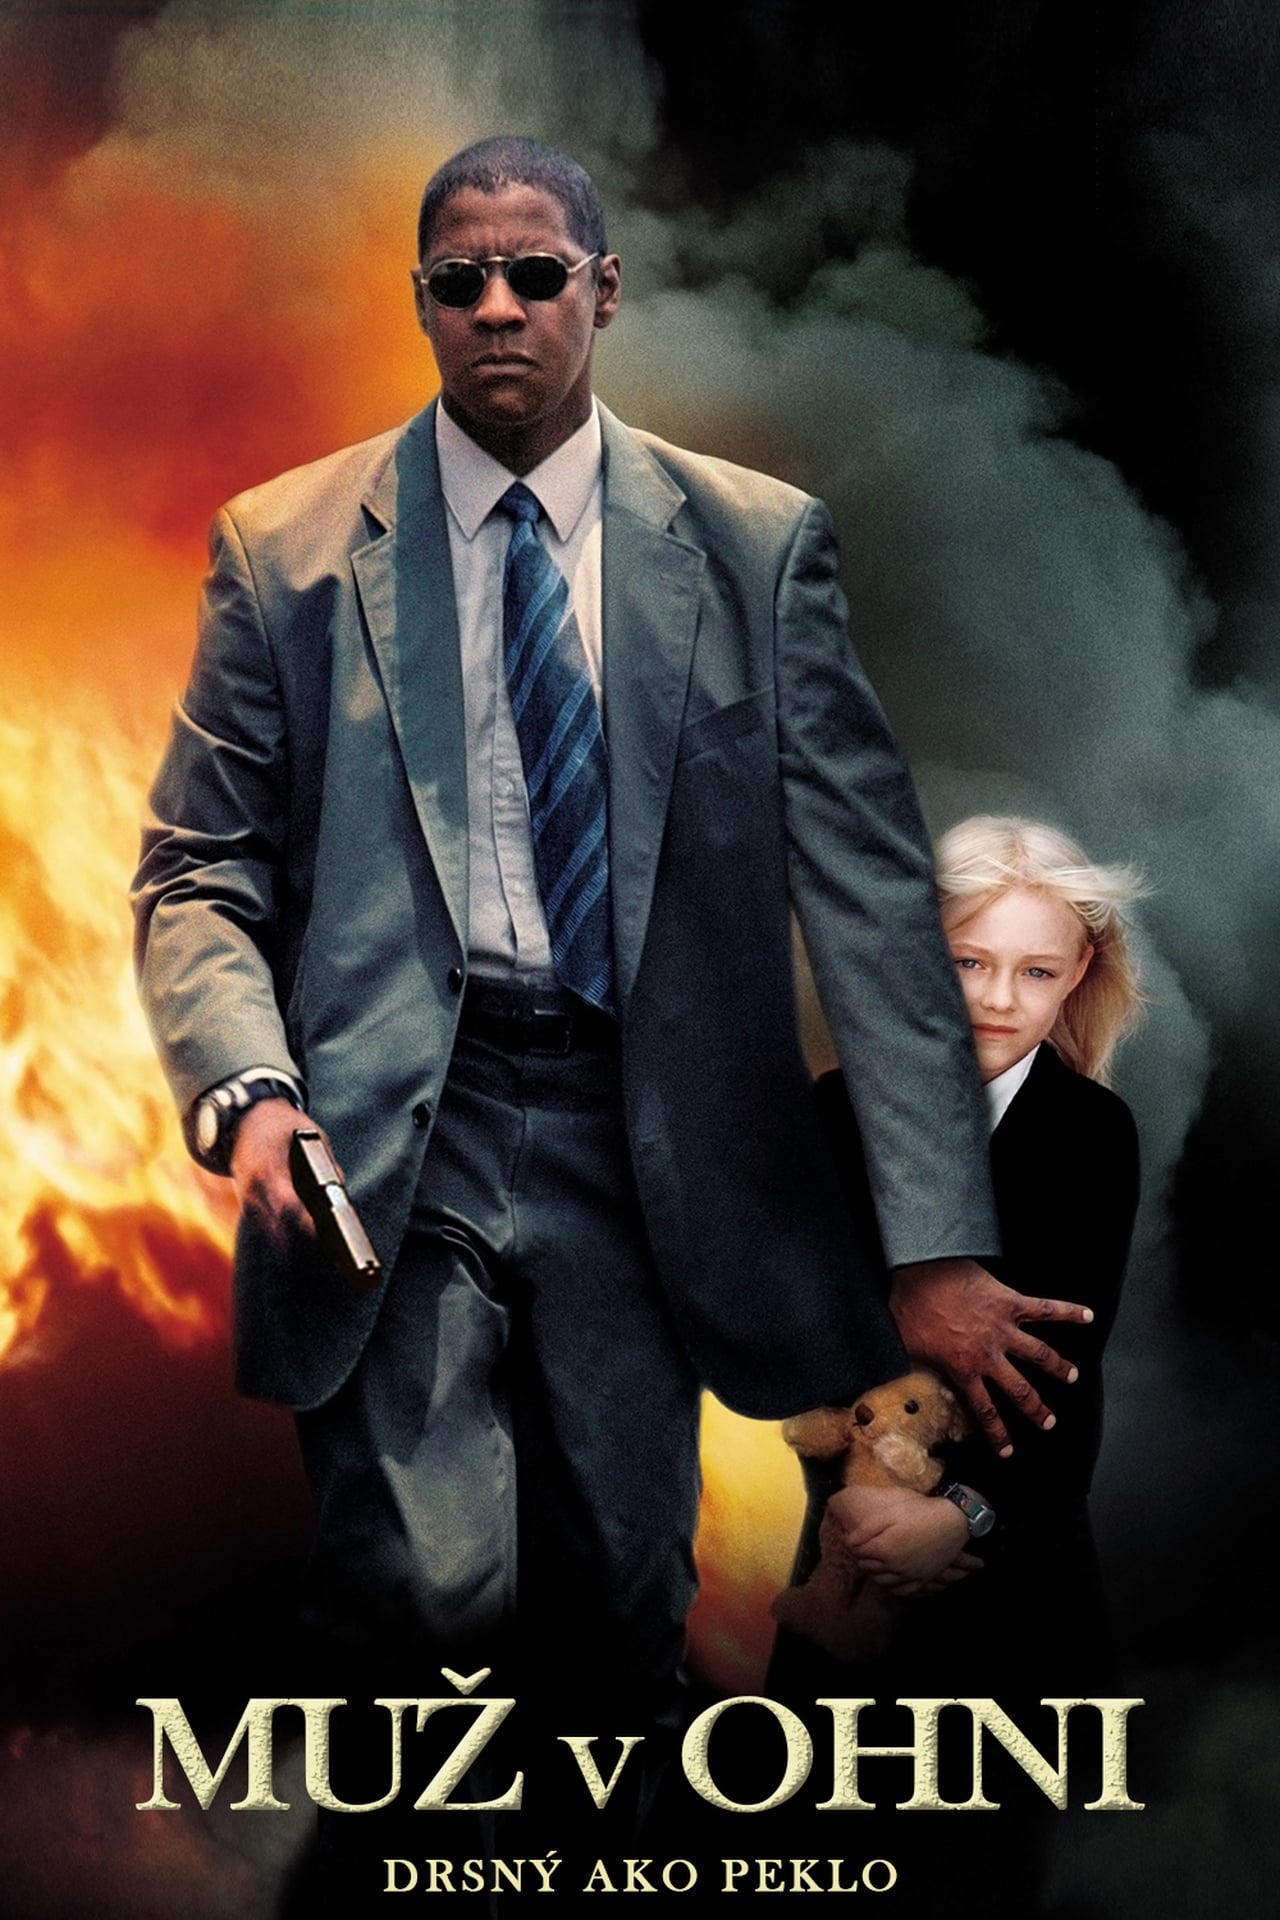 man on fire 2004 movie synopsis summary plot film details